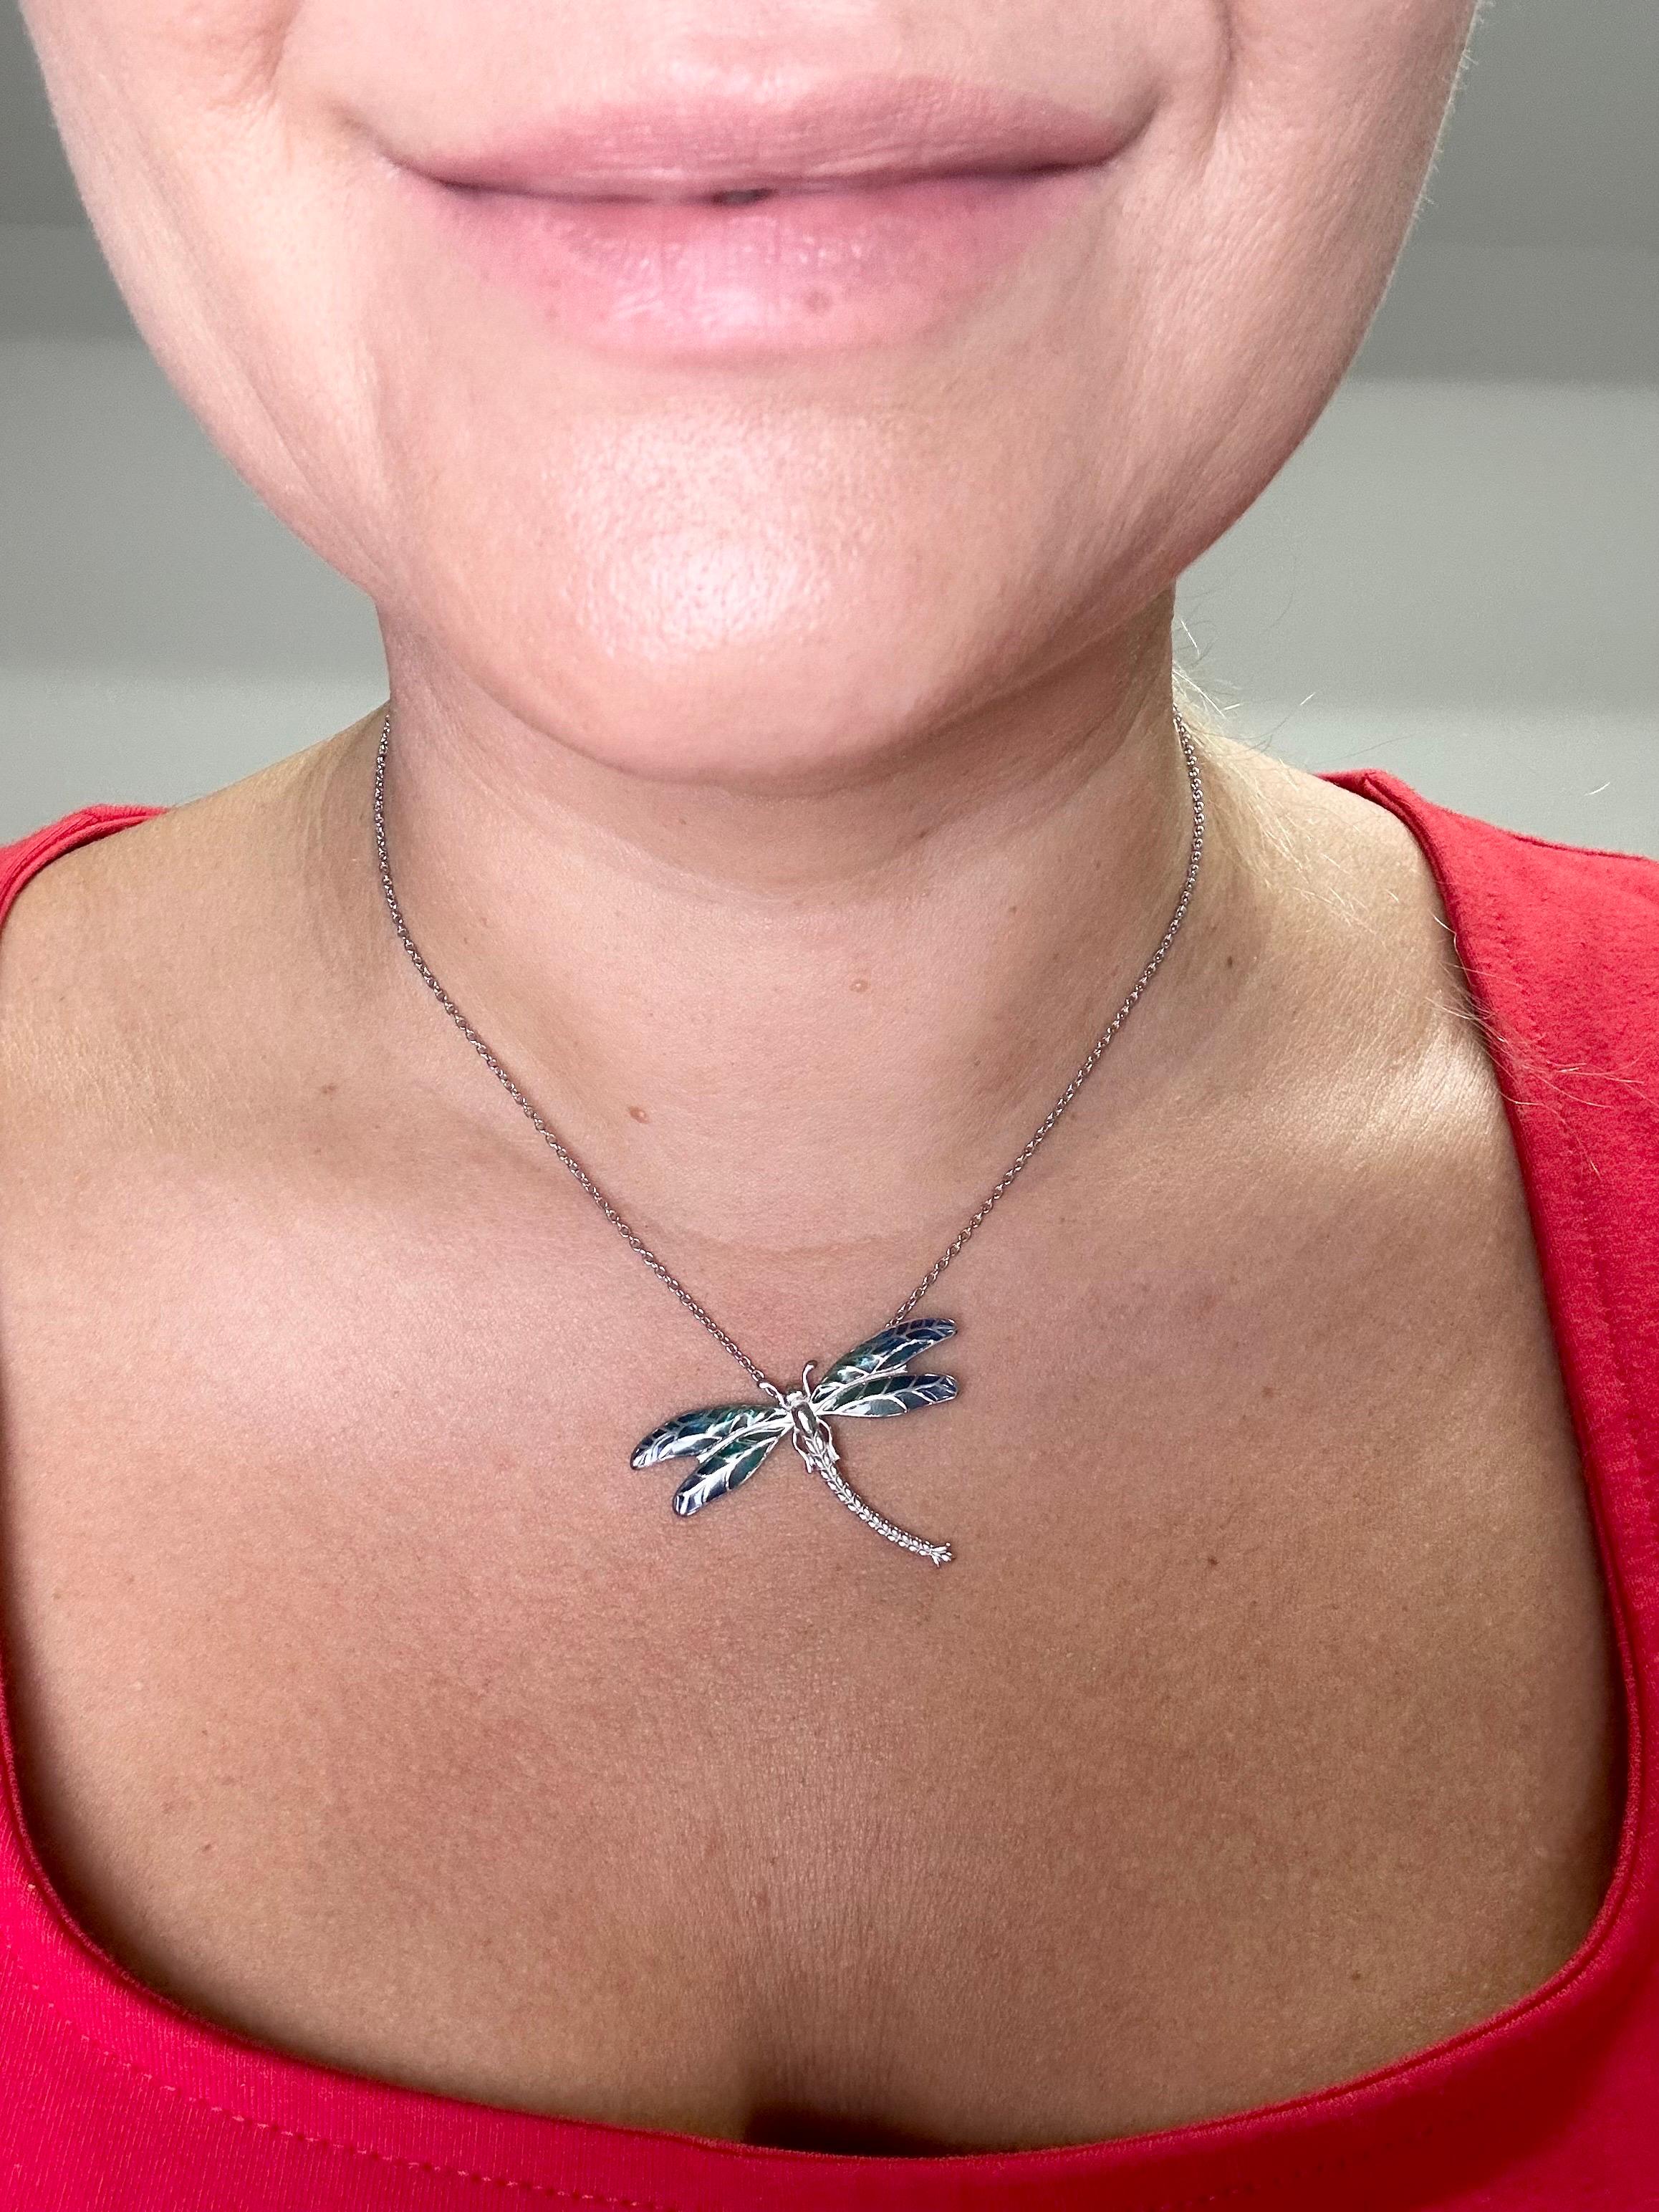 Dragonfly pendant necklace enamel pendant 925 ss For Sale 2